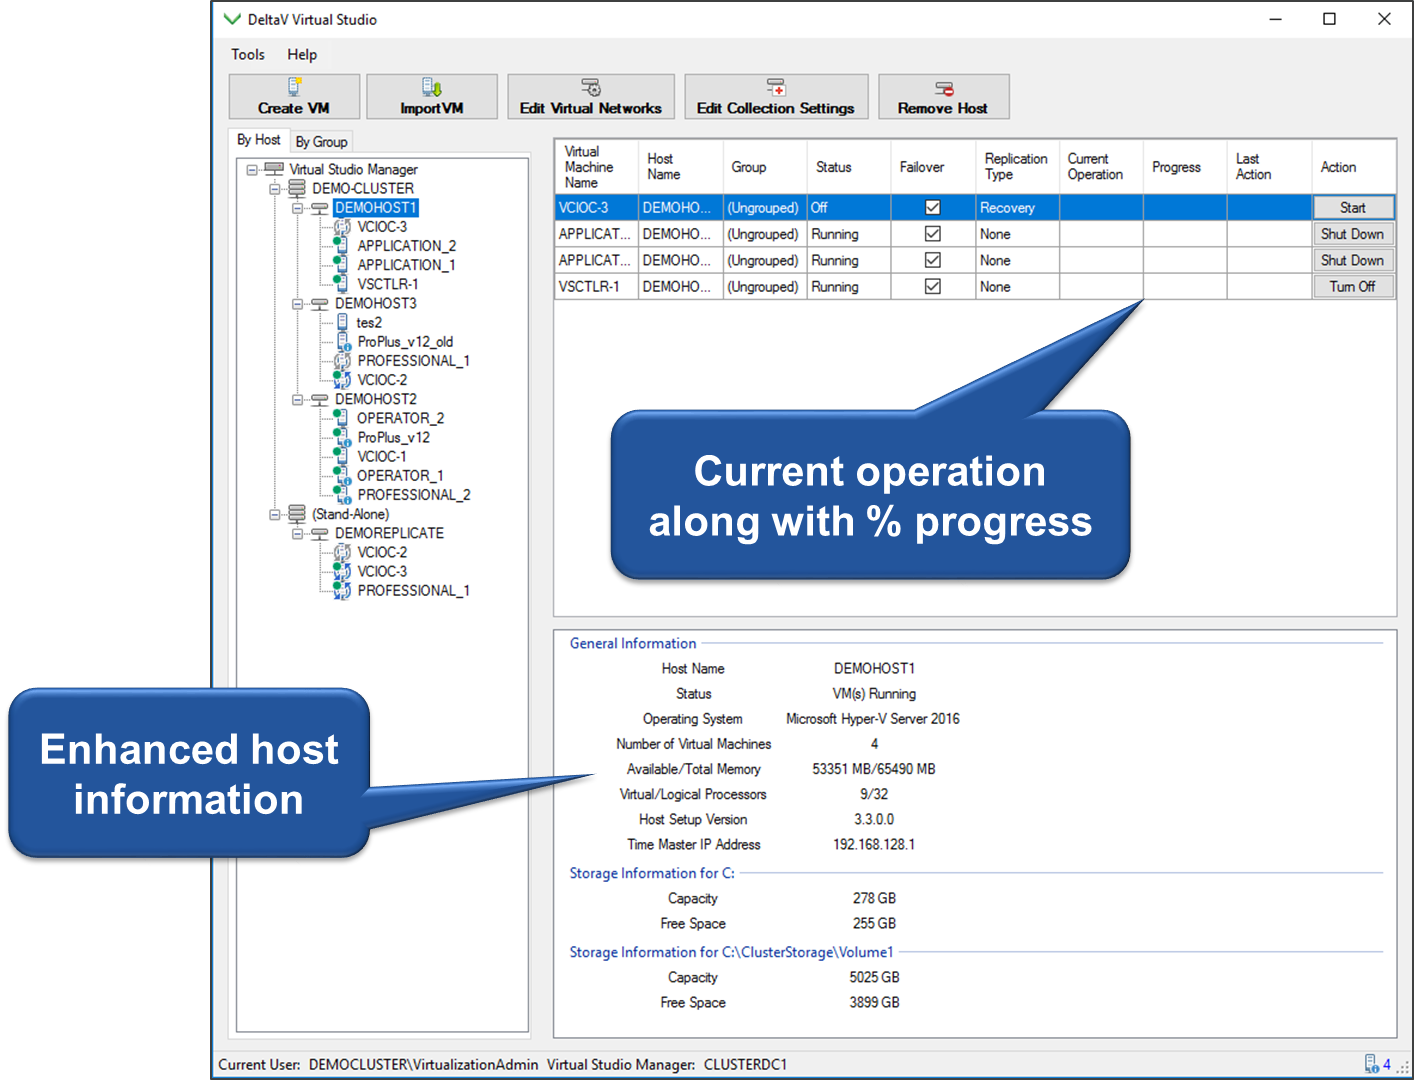 Process Control Musings: DeltaV Virtual Studio Version  - New Features